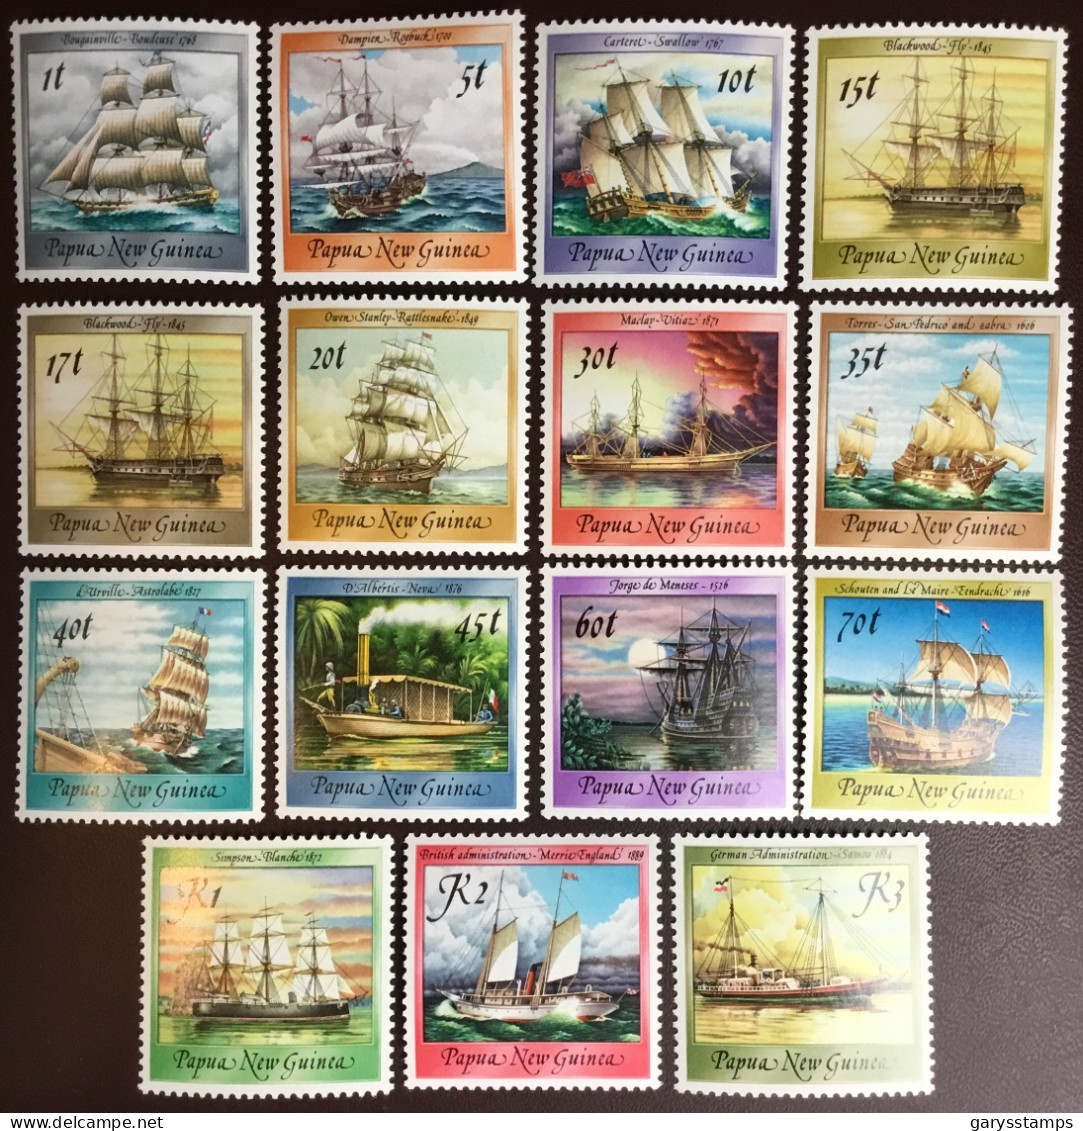 Papua New Guinea 1987 - 1988 Ships Definitives Set Complete MNH - Papua New Guinea